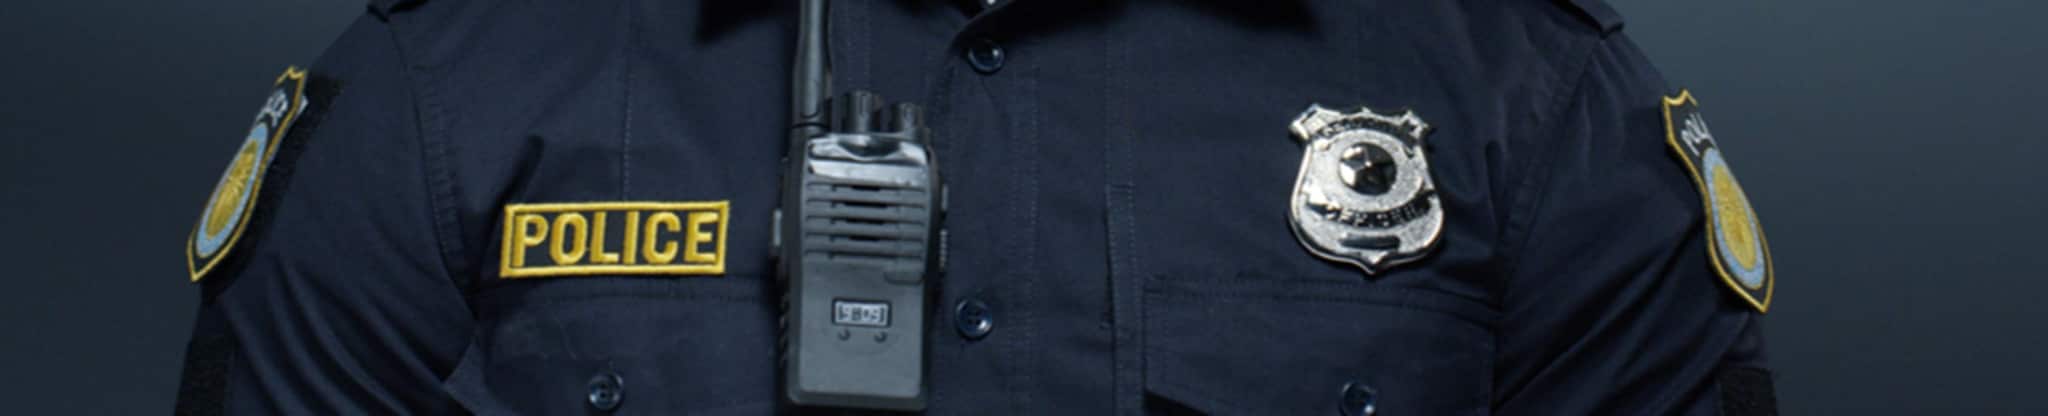 Police badge and radio